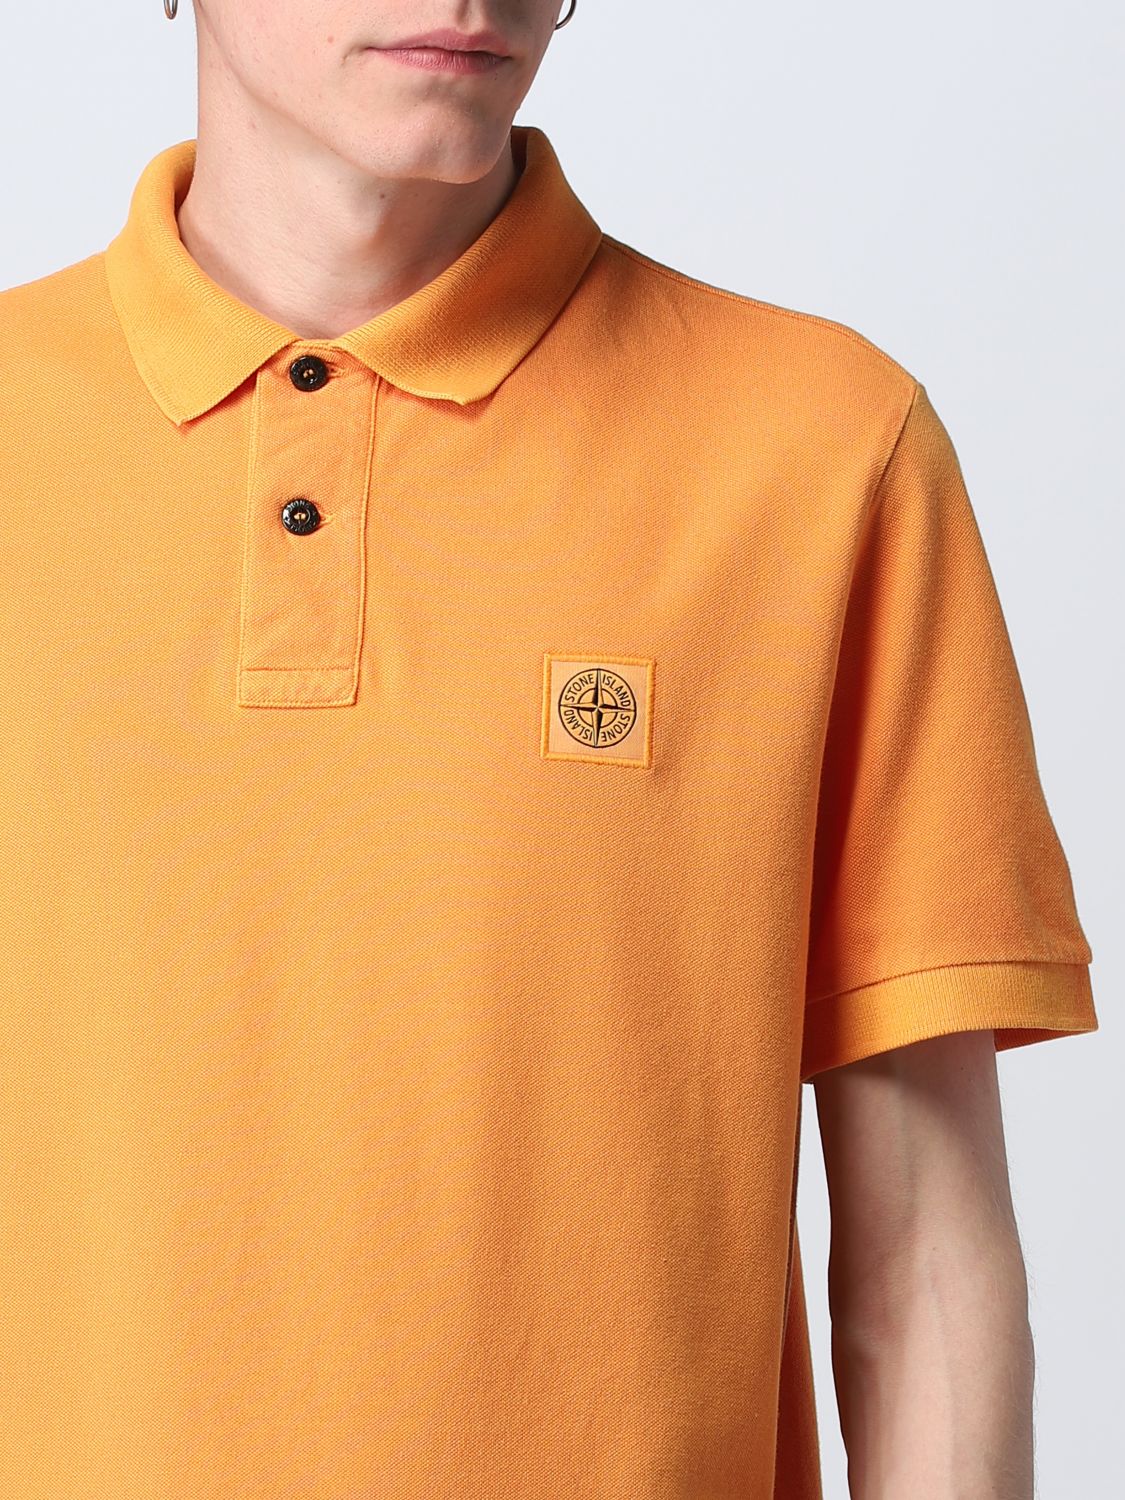 STONE ISLAND: polo shirt - Orange | Stone Island polo shirt 10152SC67 on GIGLIO.COM